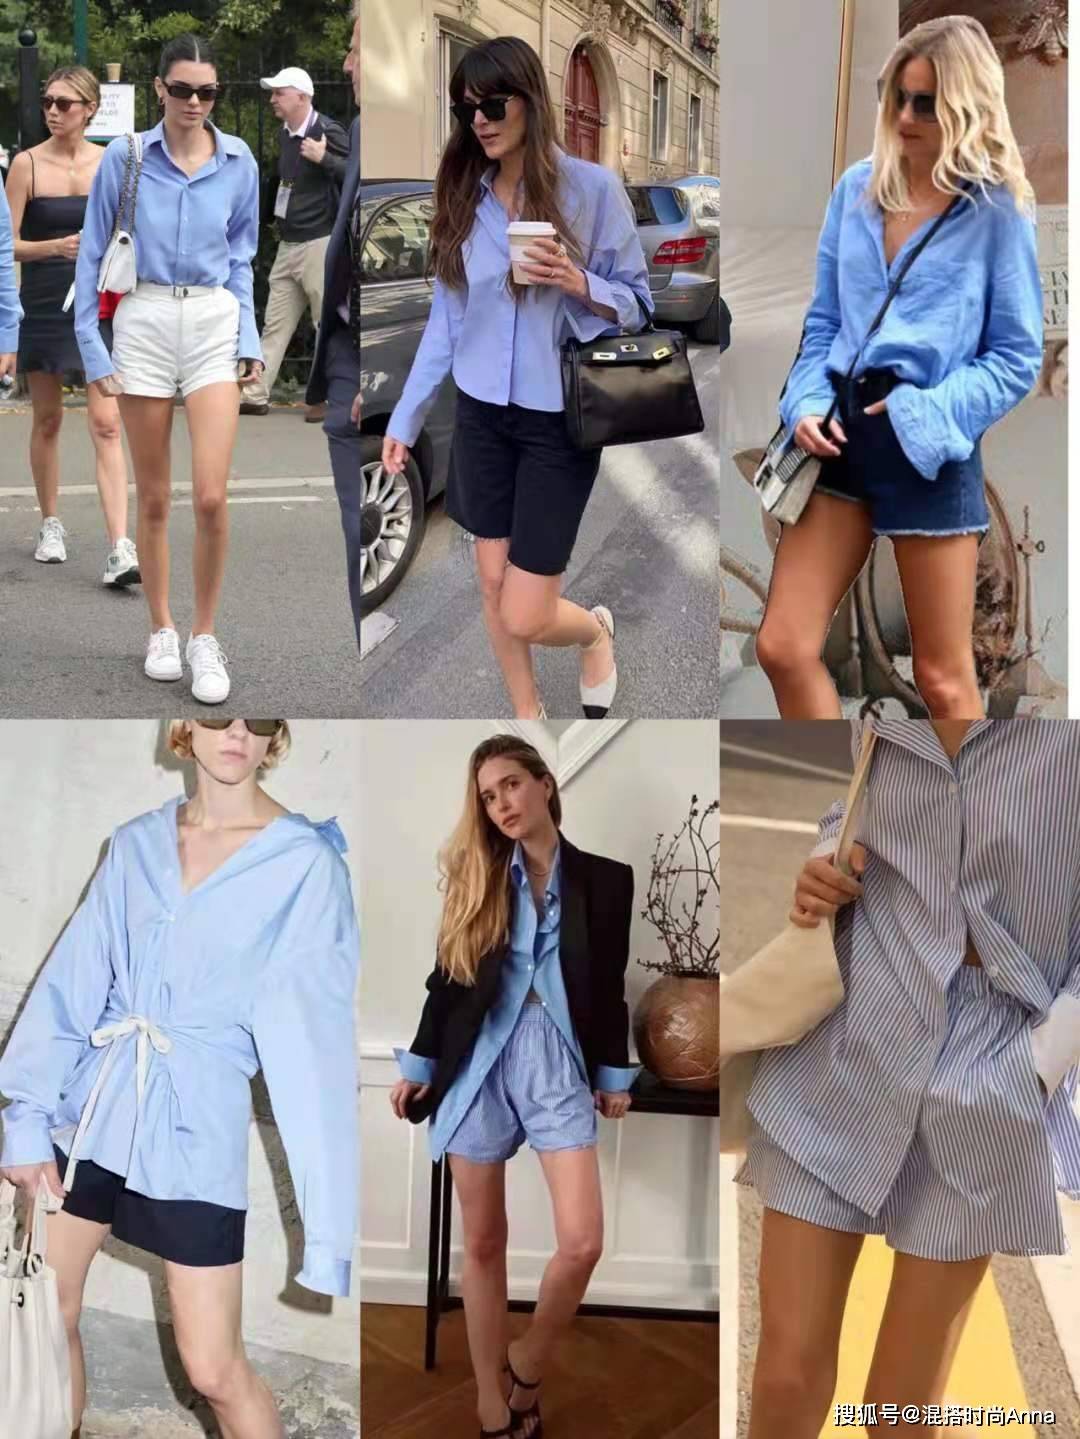 tips5:蓝衬衫搭配短裙,干练高级,展现都市职场女性的优雅魅力